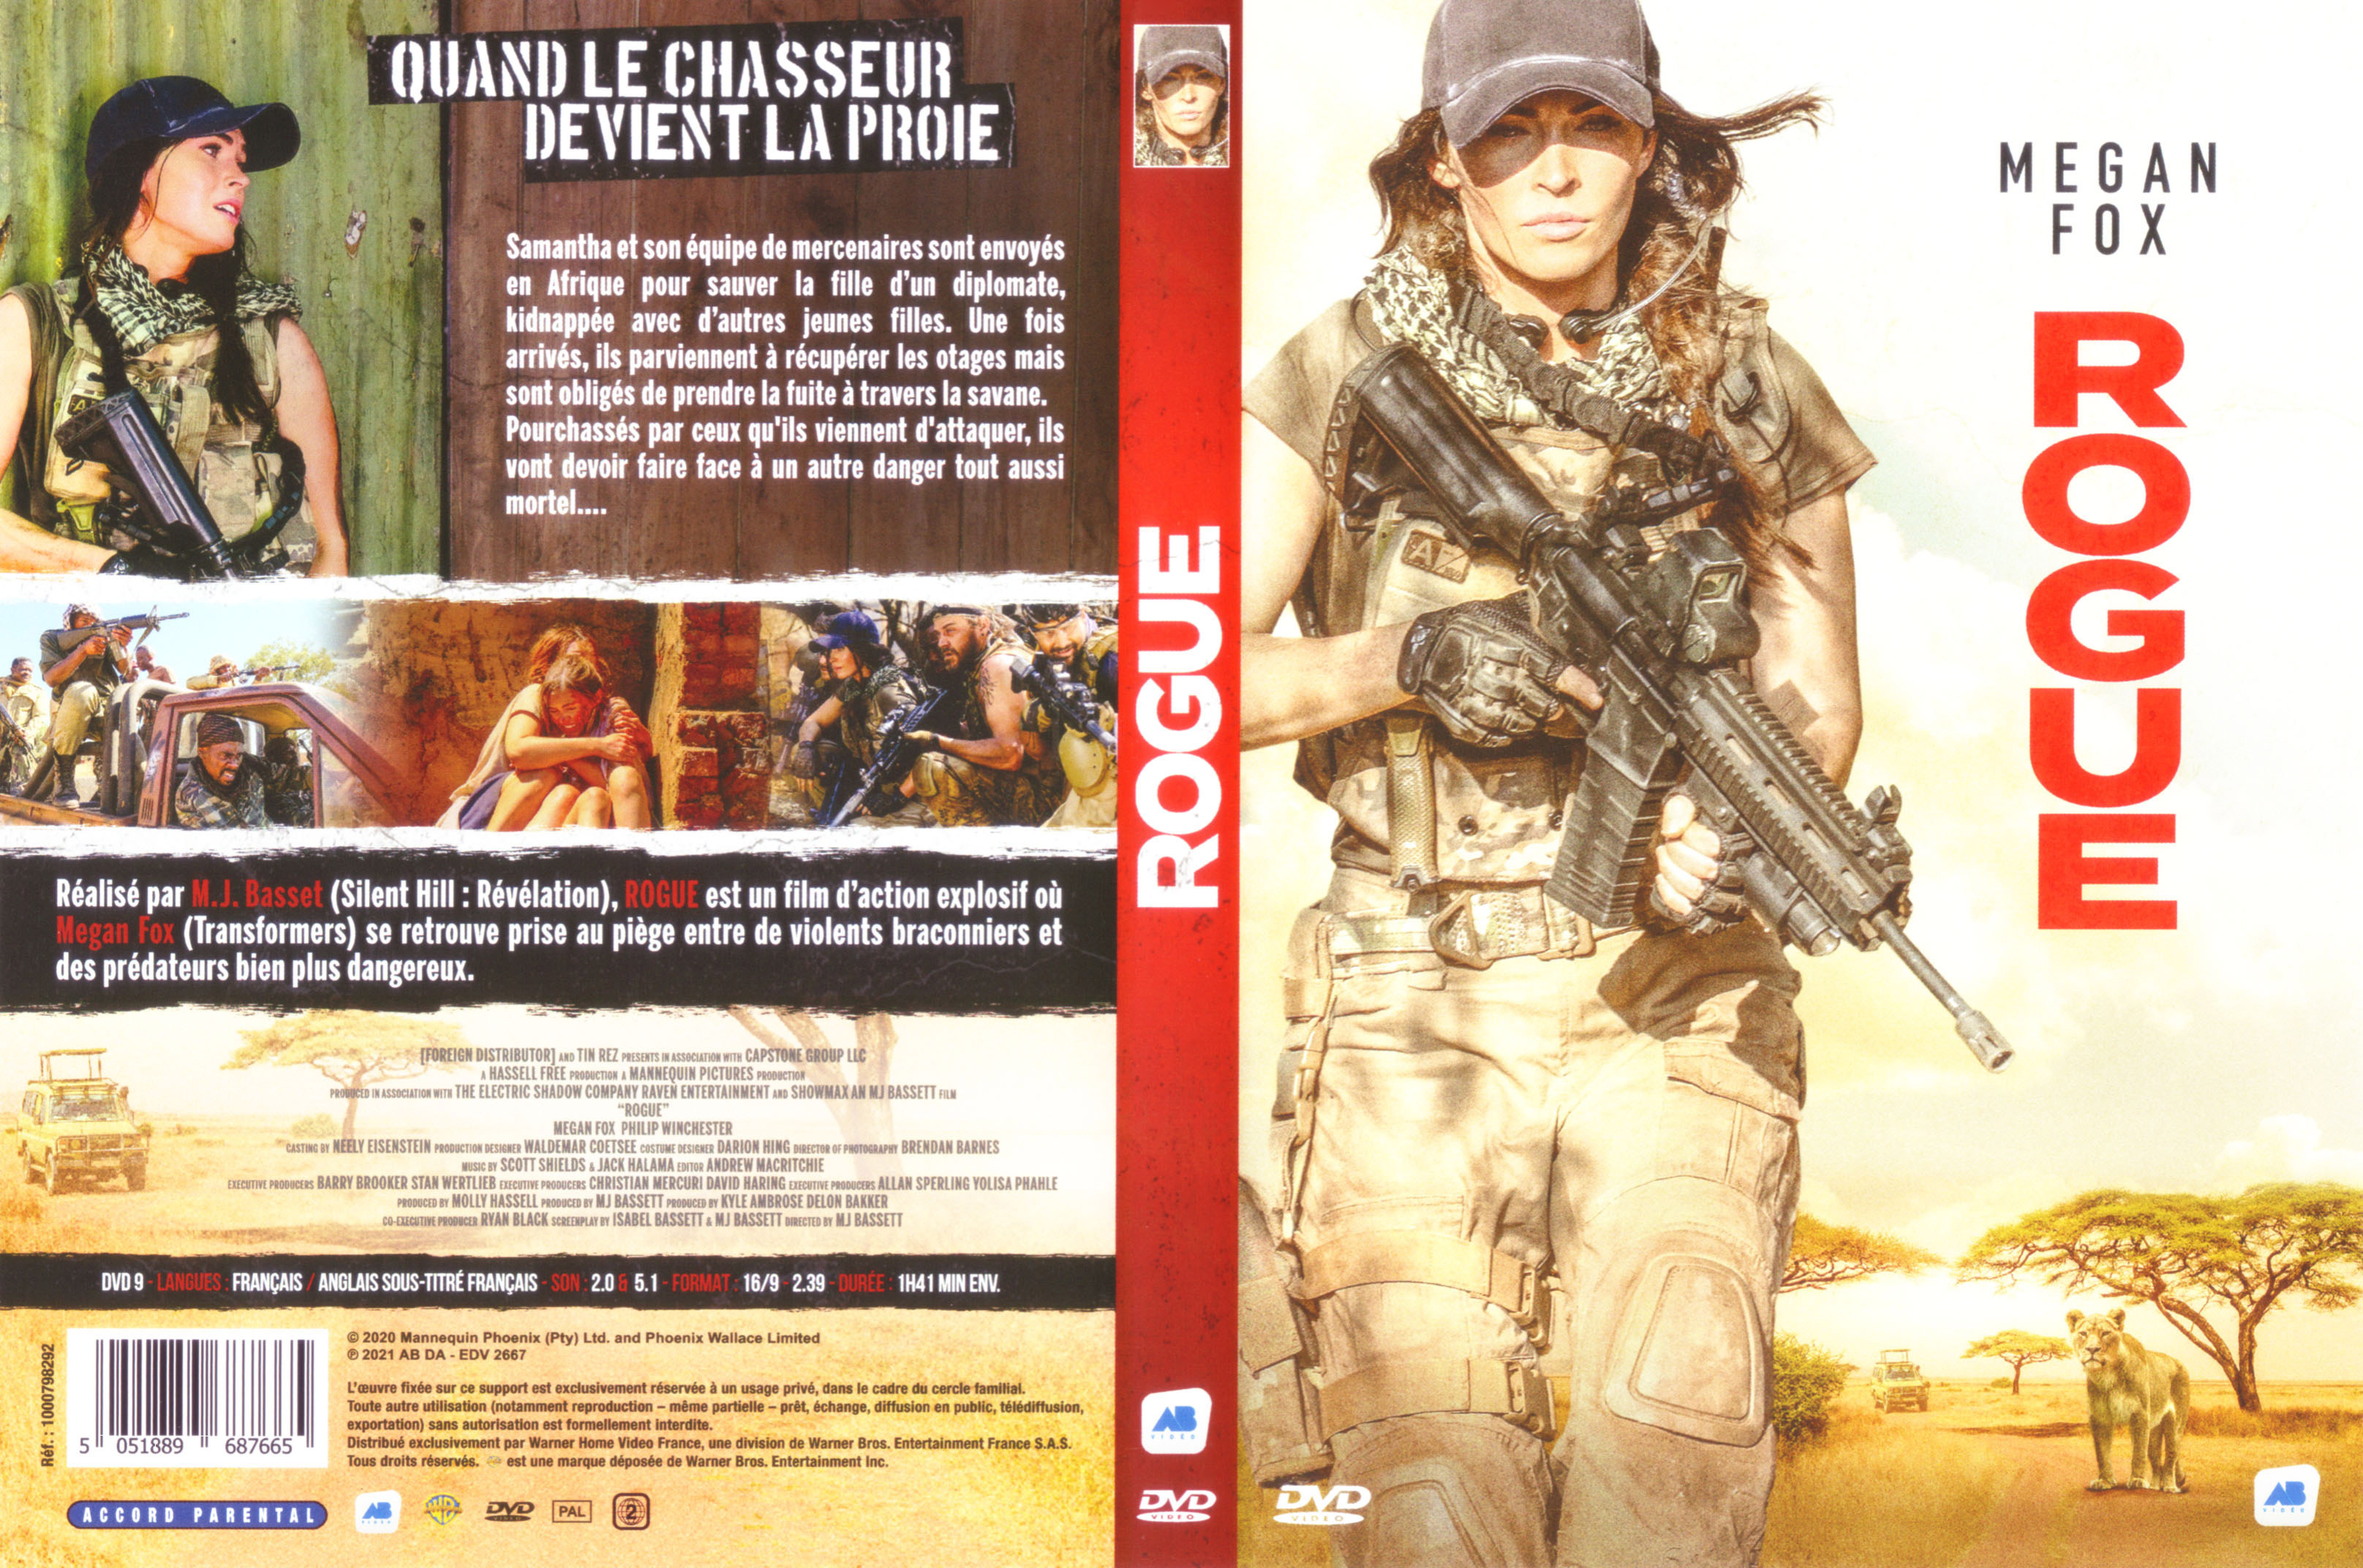 Jaquette DVD Rogue (2020)